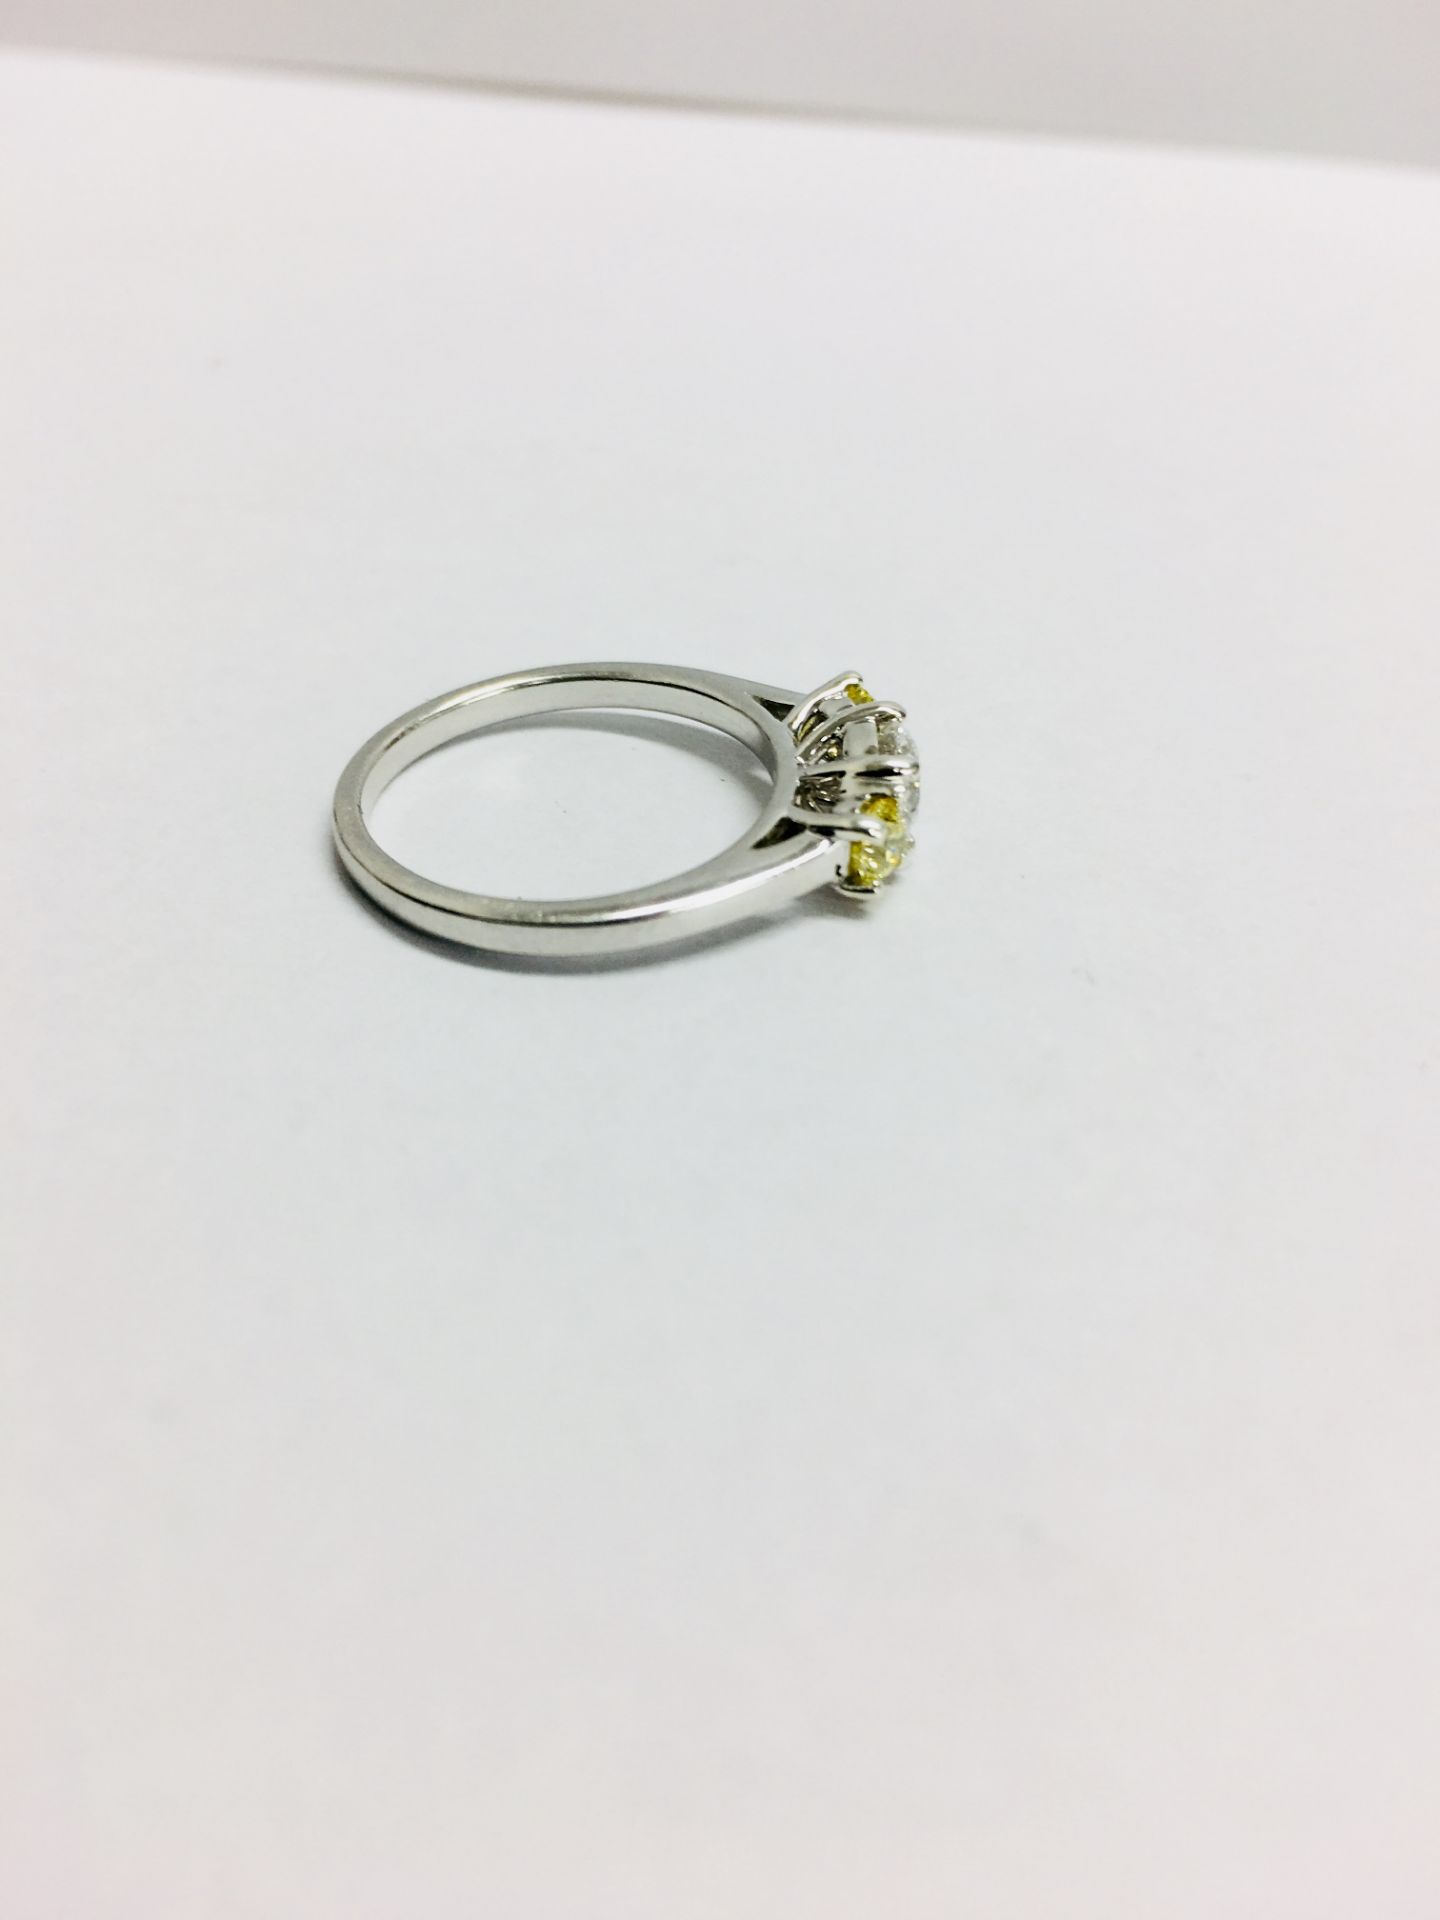 PLatinum diamond three stone ring,0.50ct centre D colour vs clarity brilliant cut diamond.two 0.10ct - Image 4 of 5